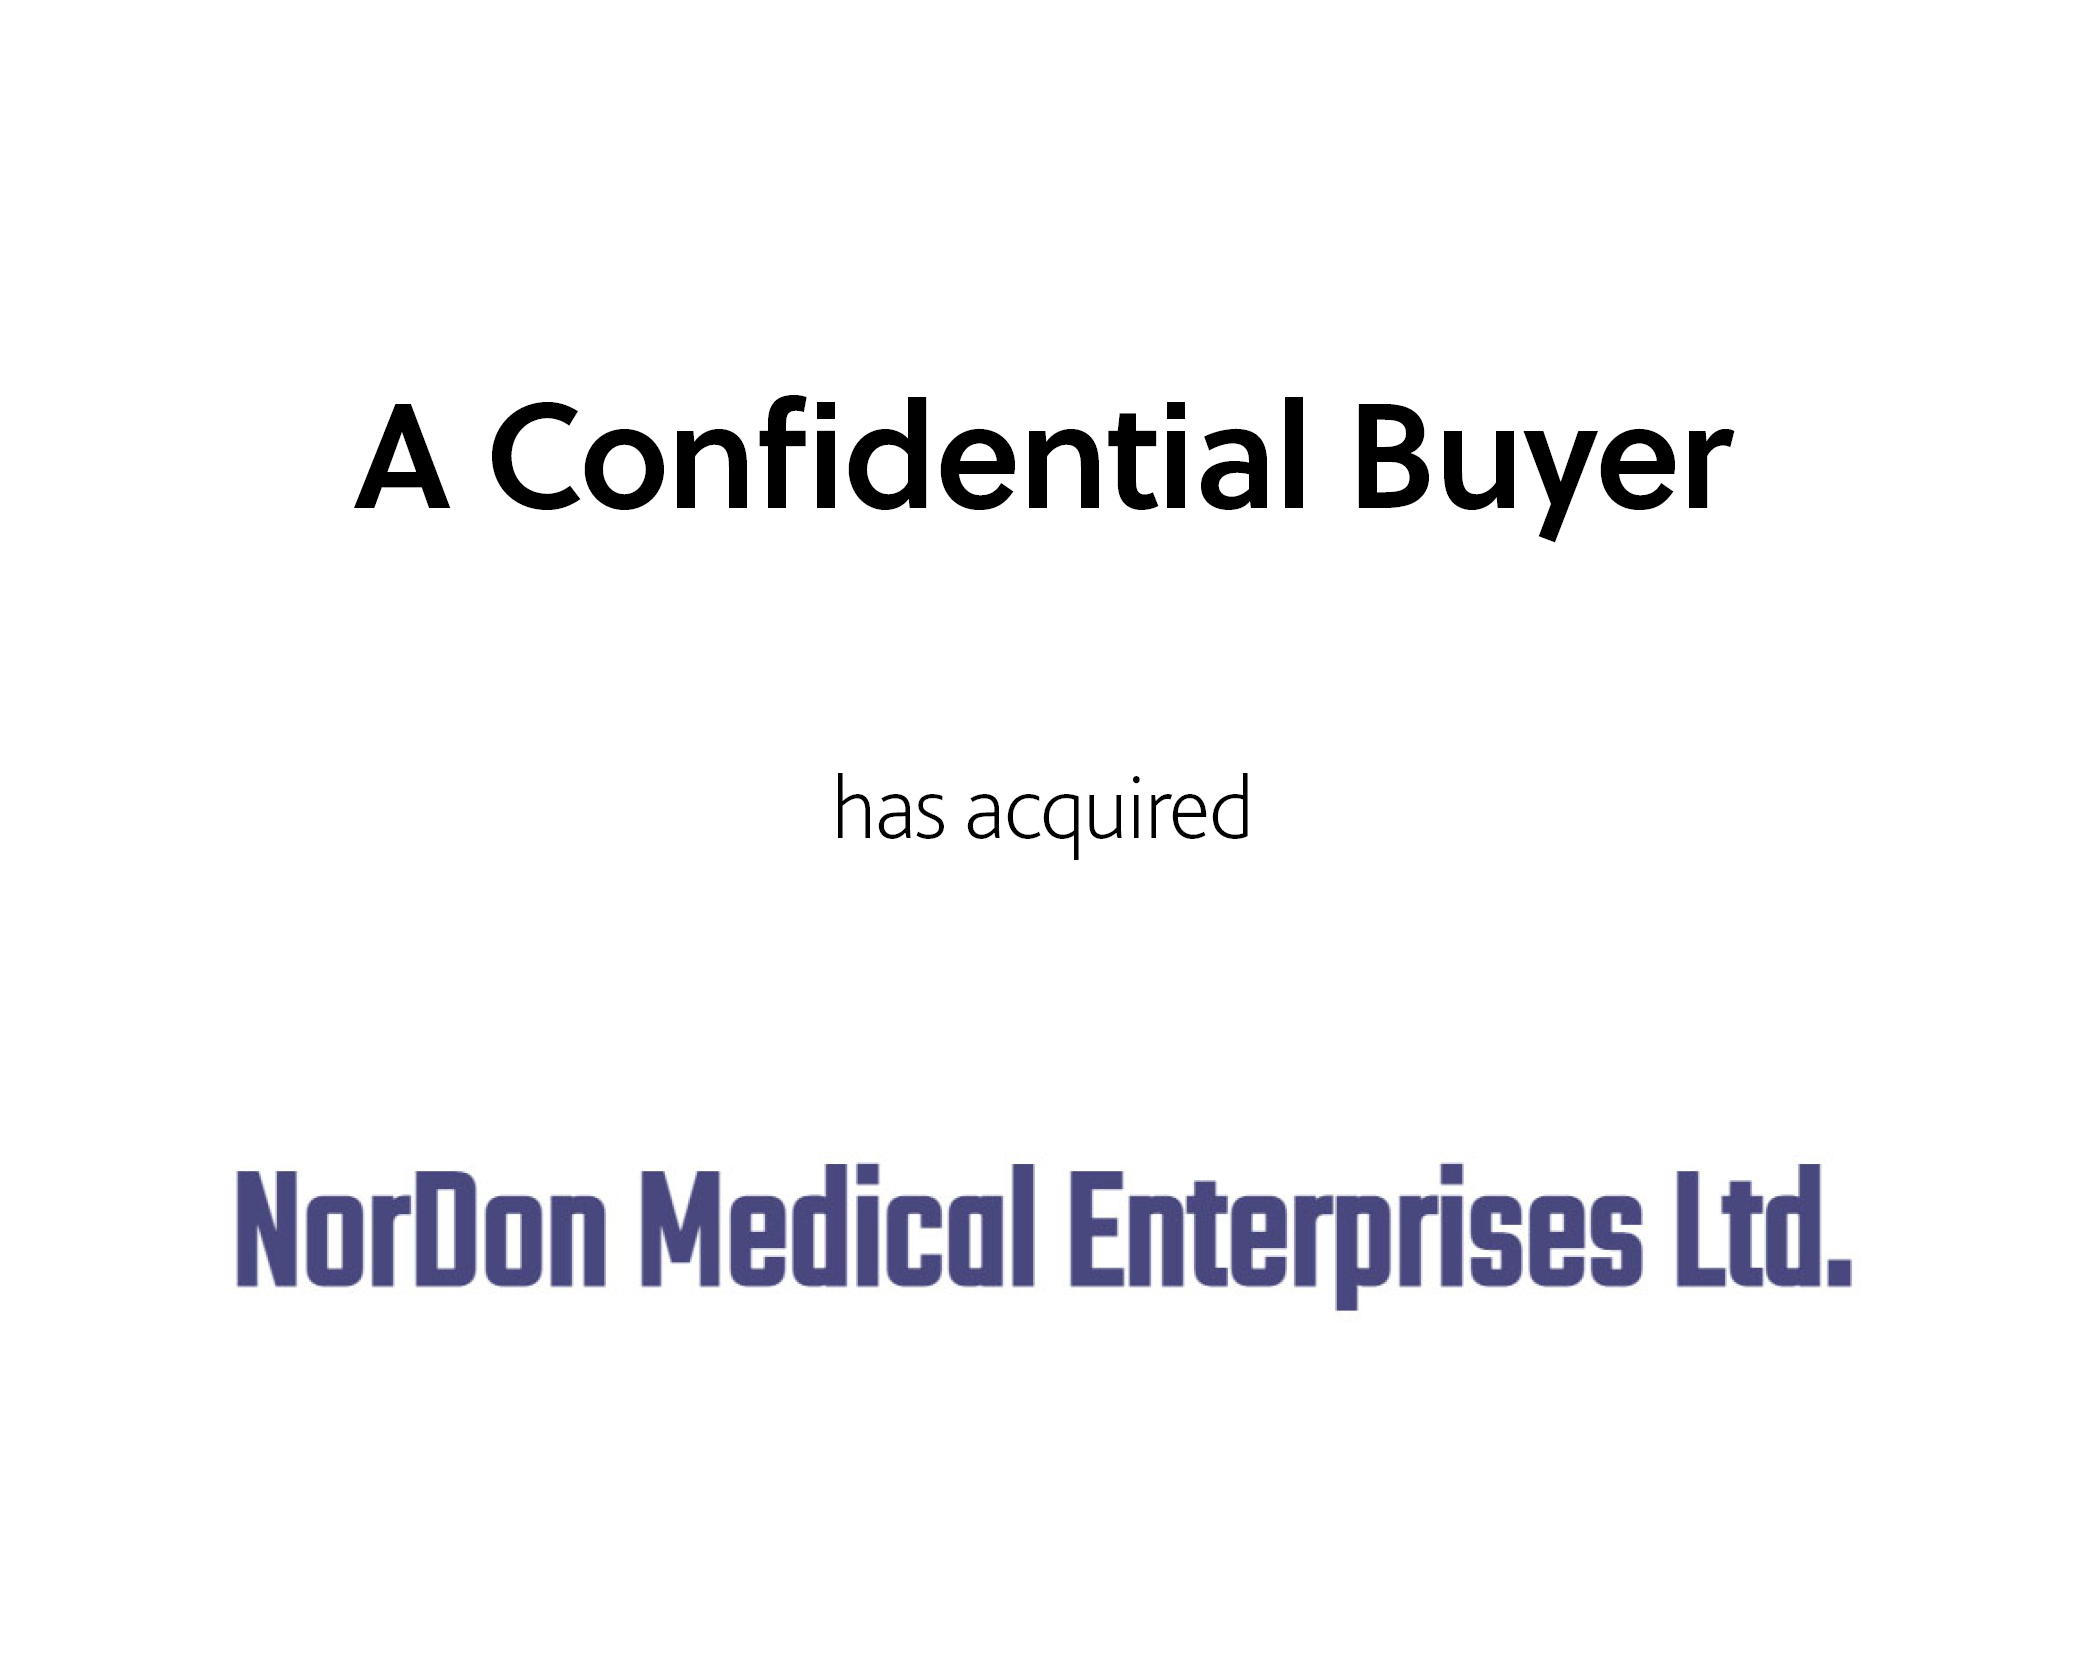 A confidential Buyer has acquired NorDon Medical Enterprises Ltd